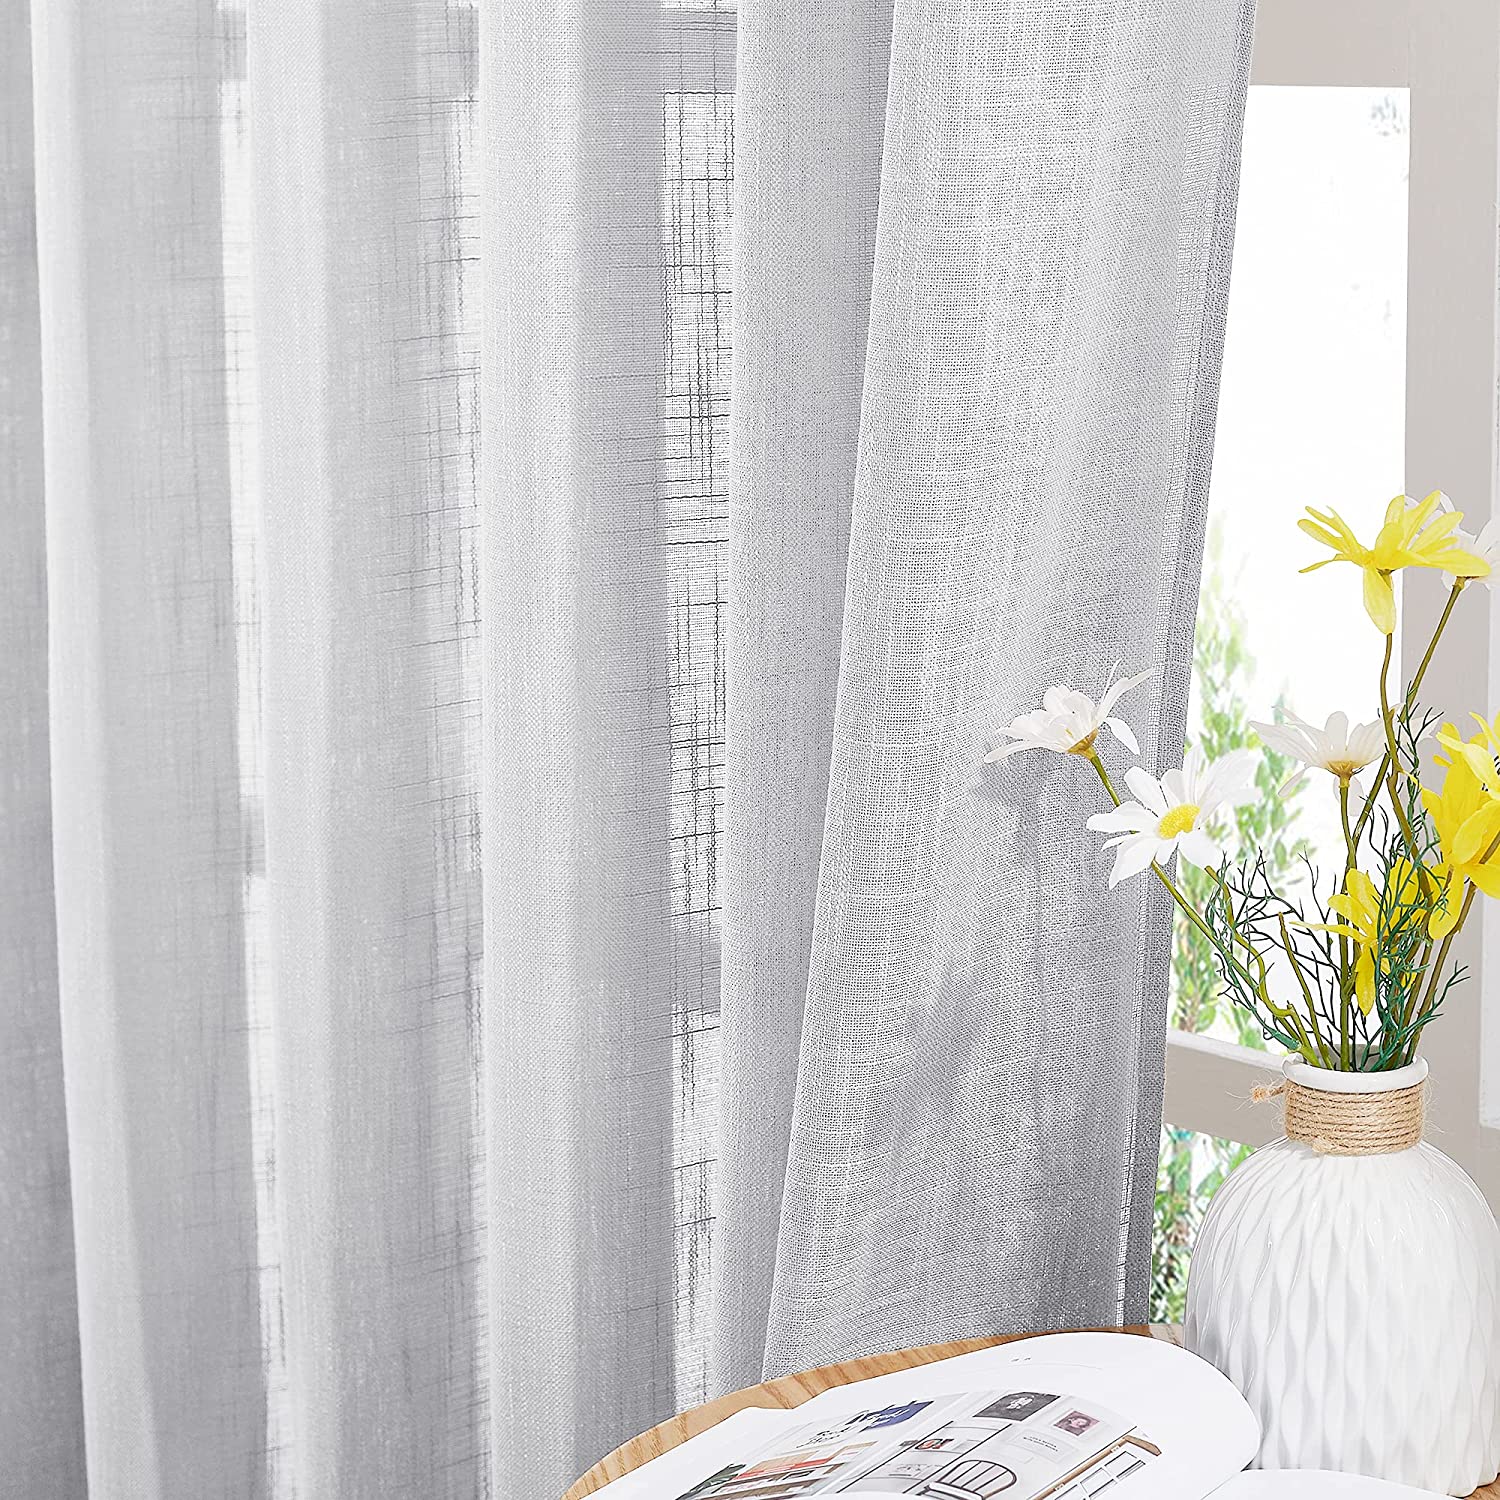 Grommet Semi Sheer Privacy Linen Curtains For Sliding Glass Door For Bedroom 1 Panel KGORGE Store